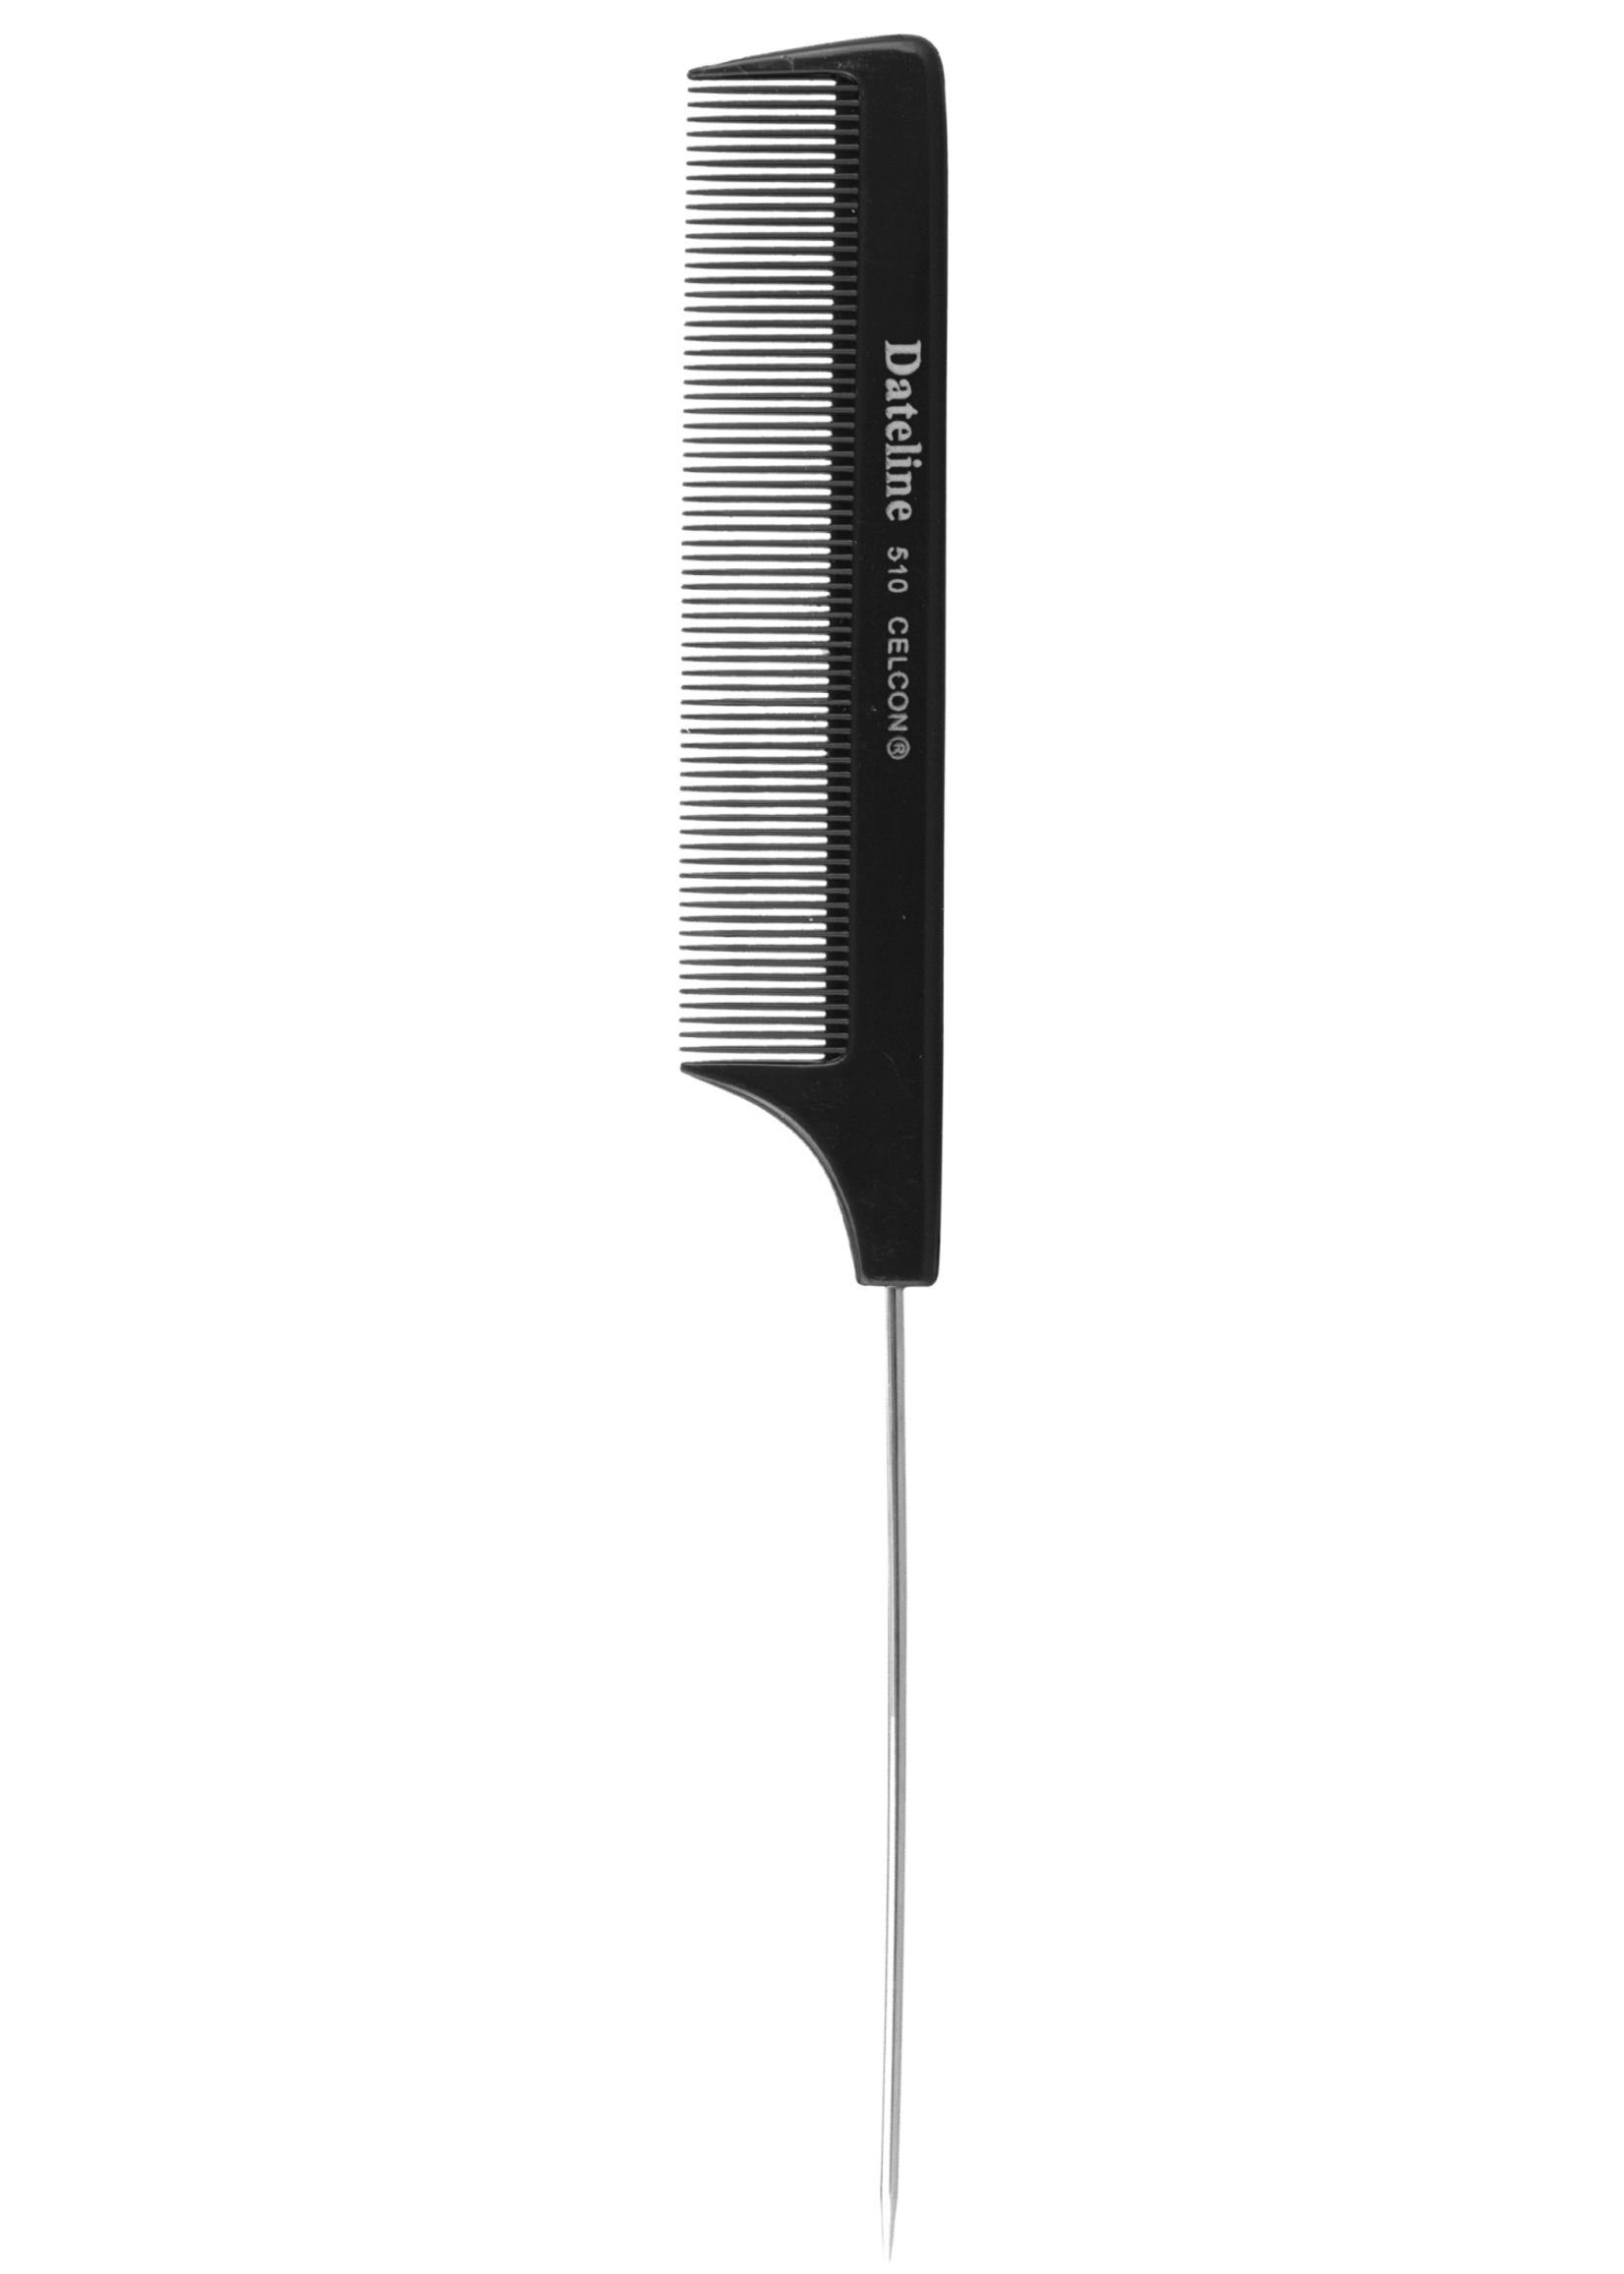 Dateline Dateline Black Celcon 510 Metal Tail Comb